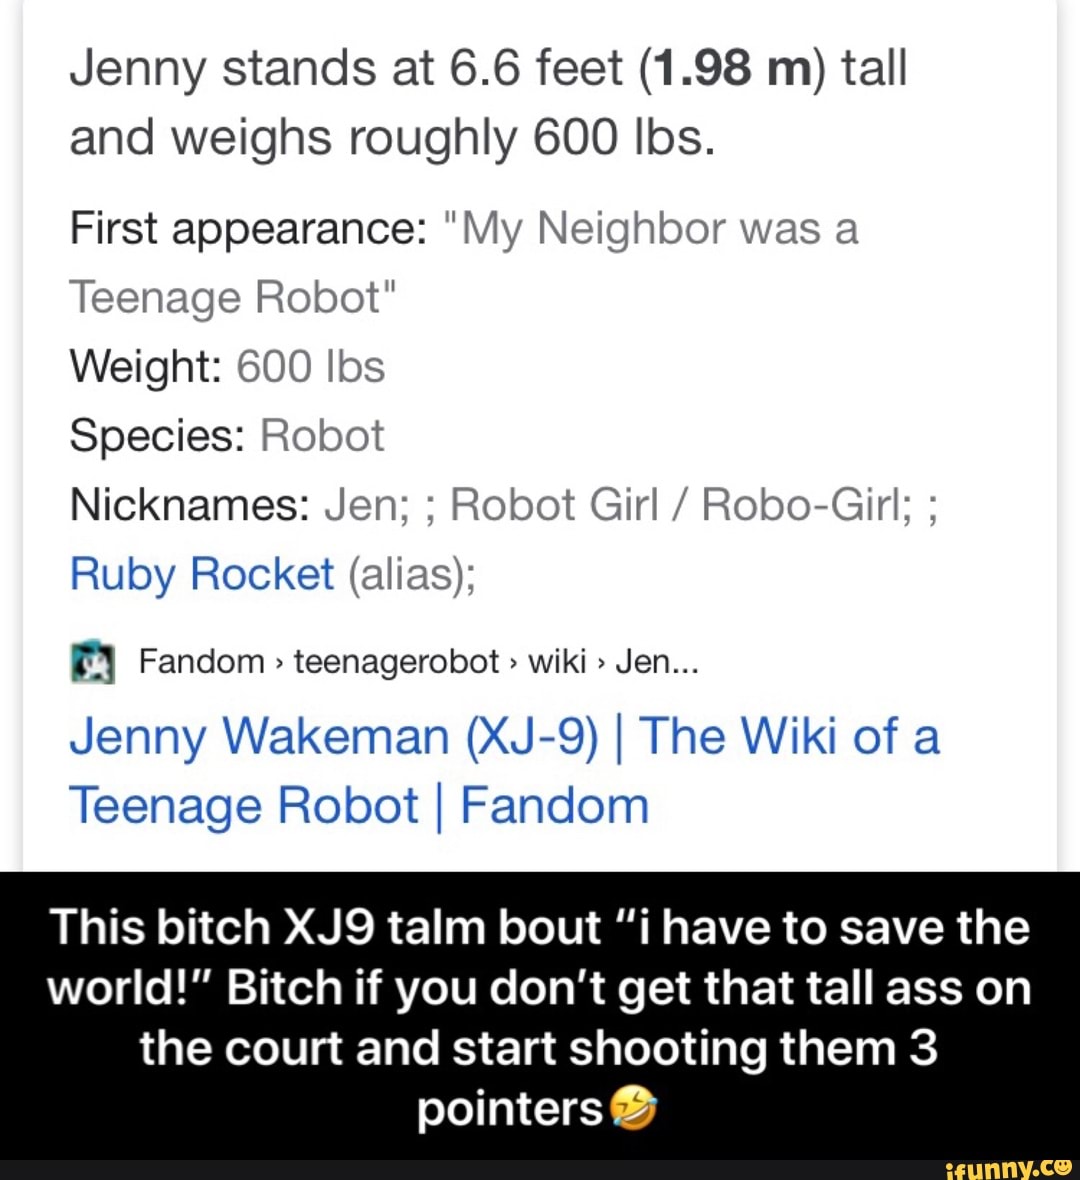 Jenny Wakeman (XJ-9), The Wiki of a Teenage Robot